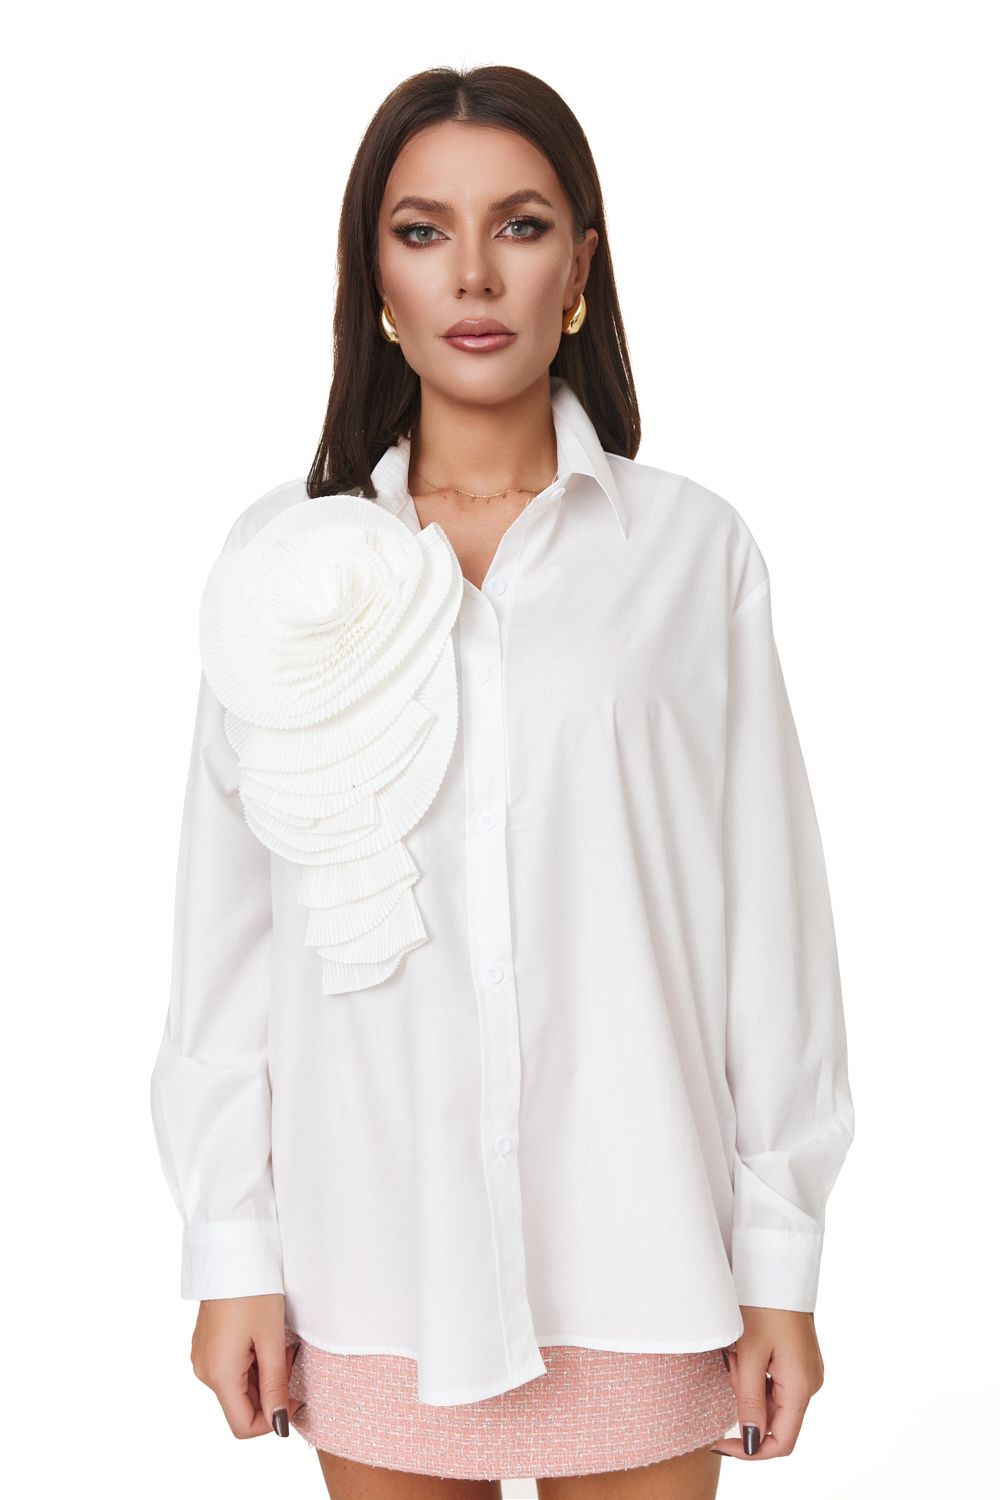 Sheylia Bogas elegant white ladies shirt